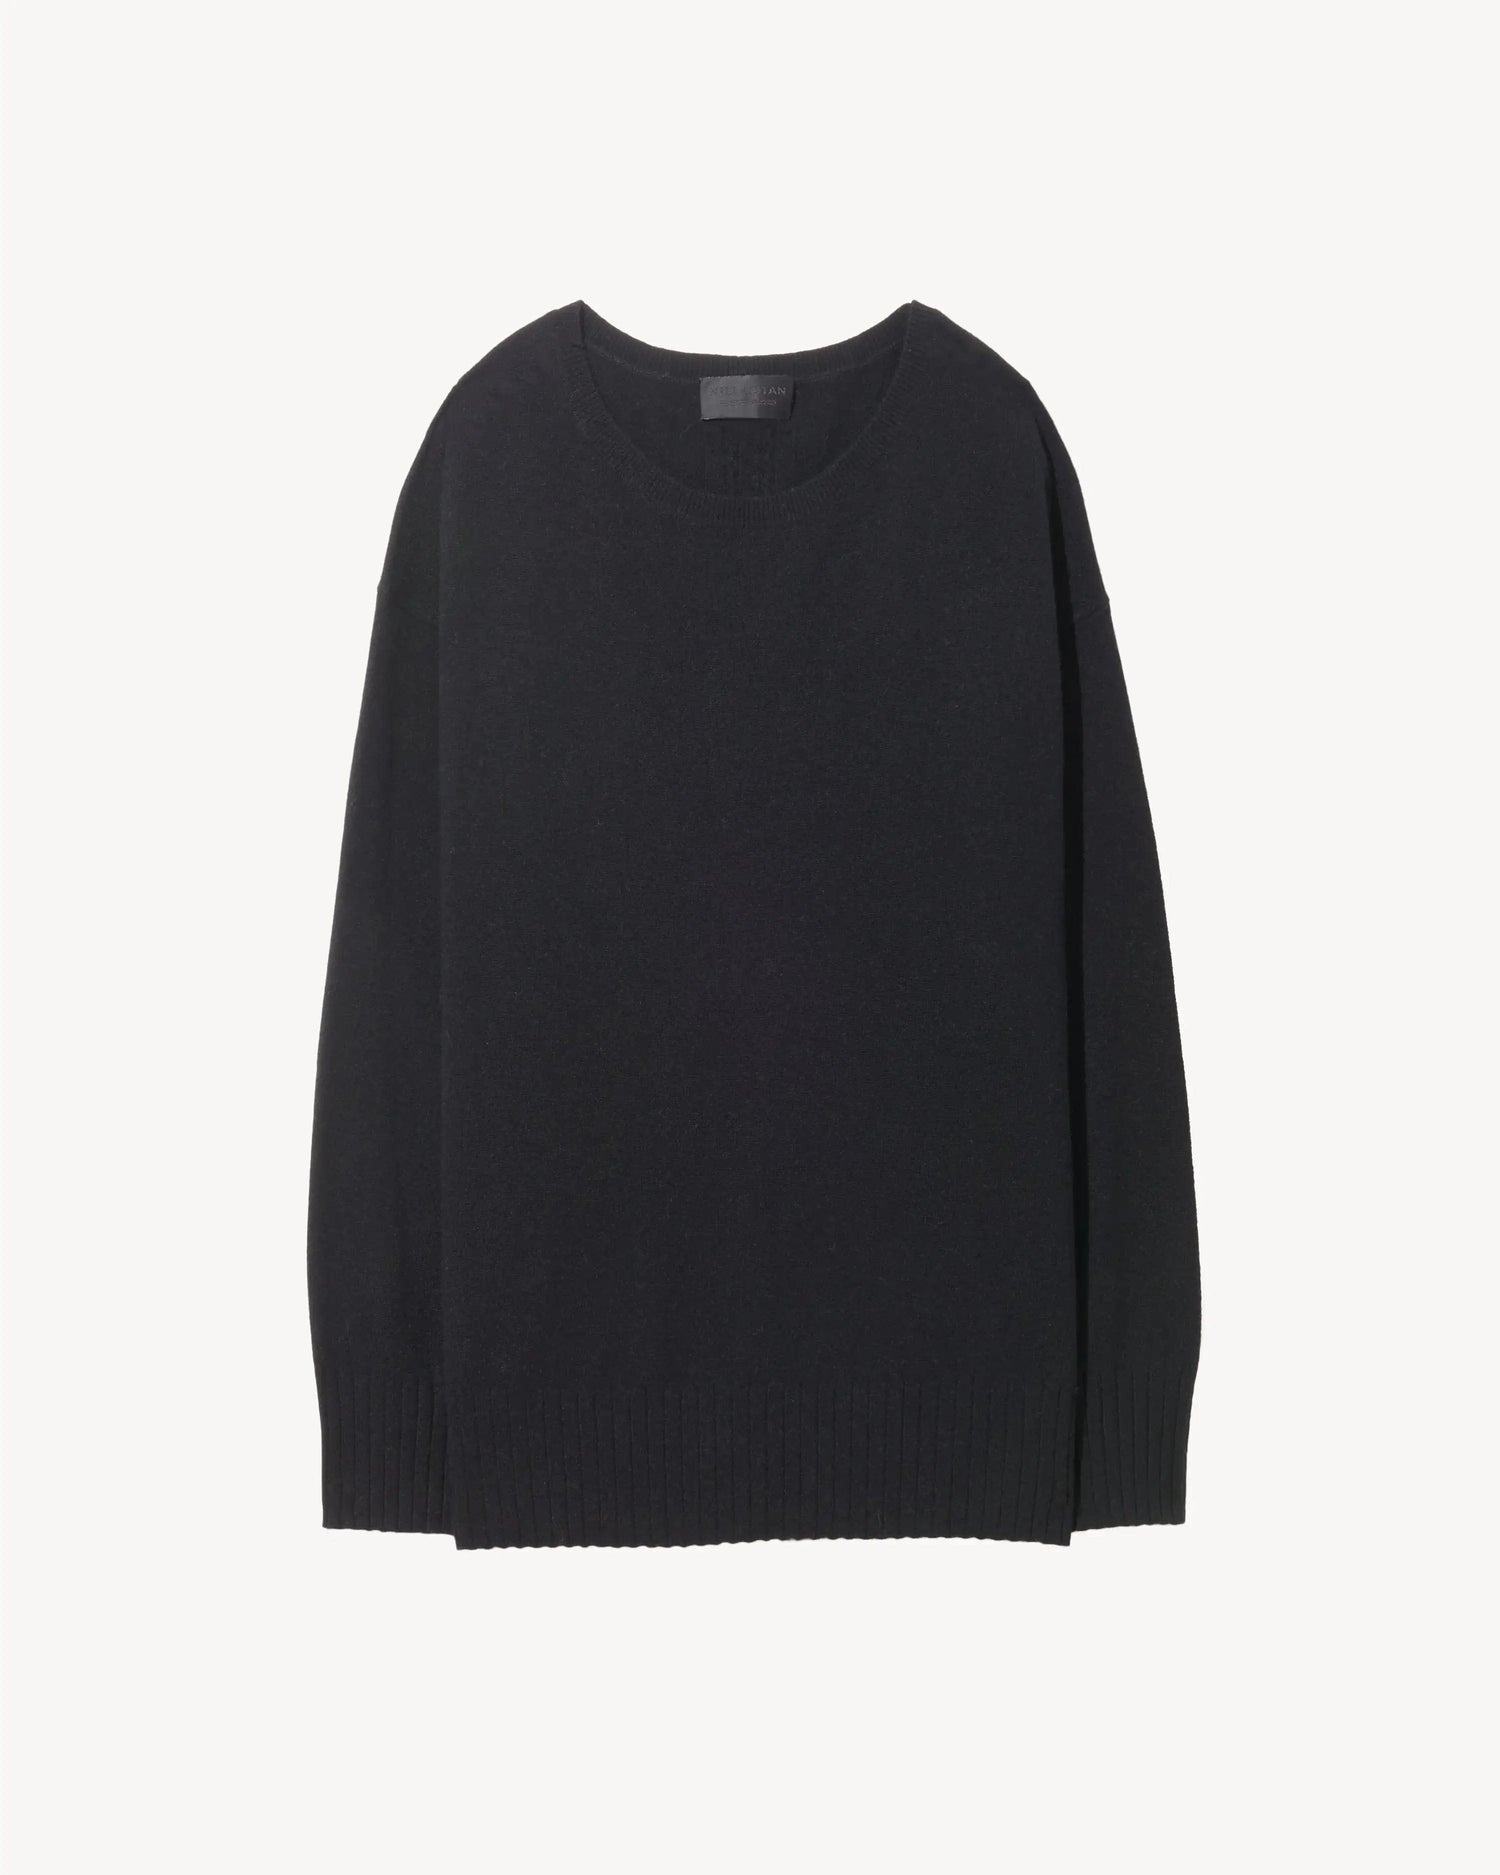 Nili Lotan Shirts & Tops Nili Lotan - Boyfriend Sweater in Black